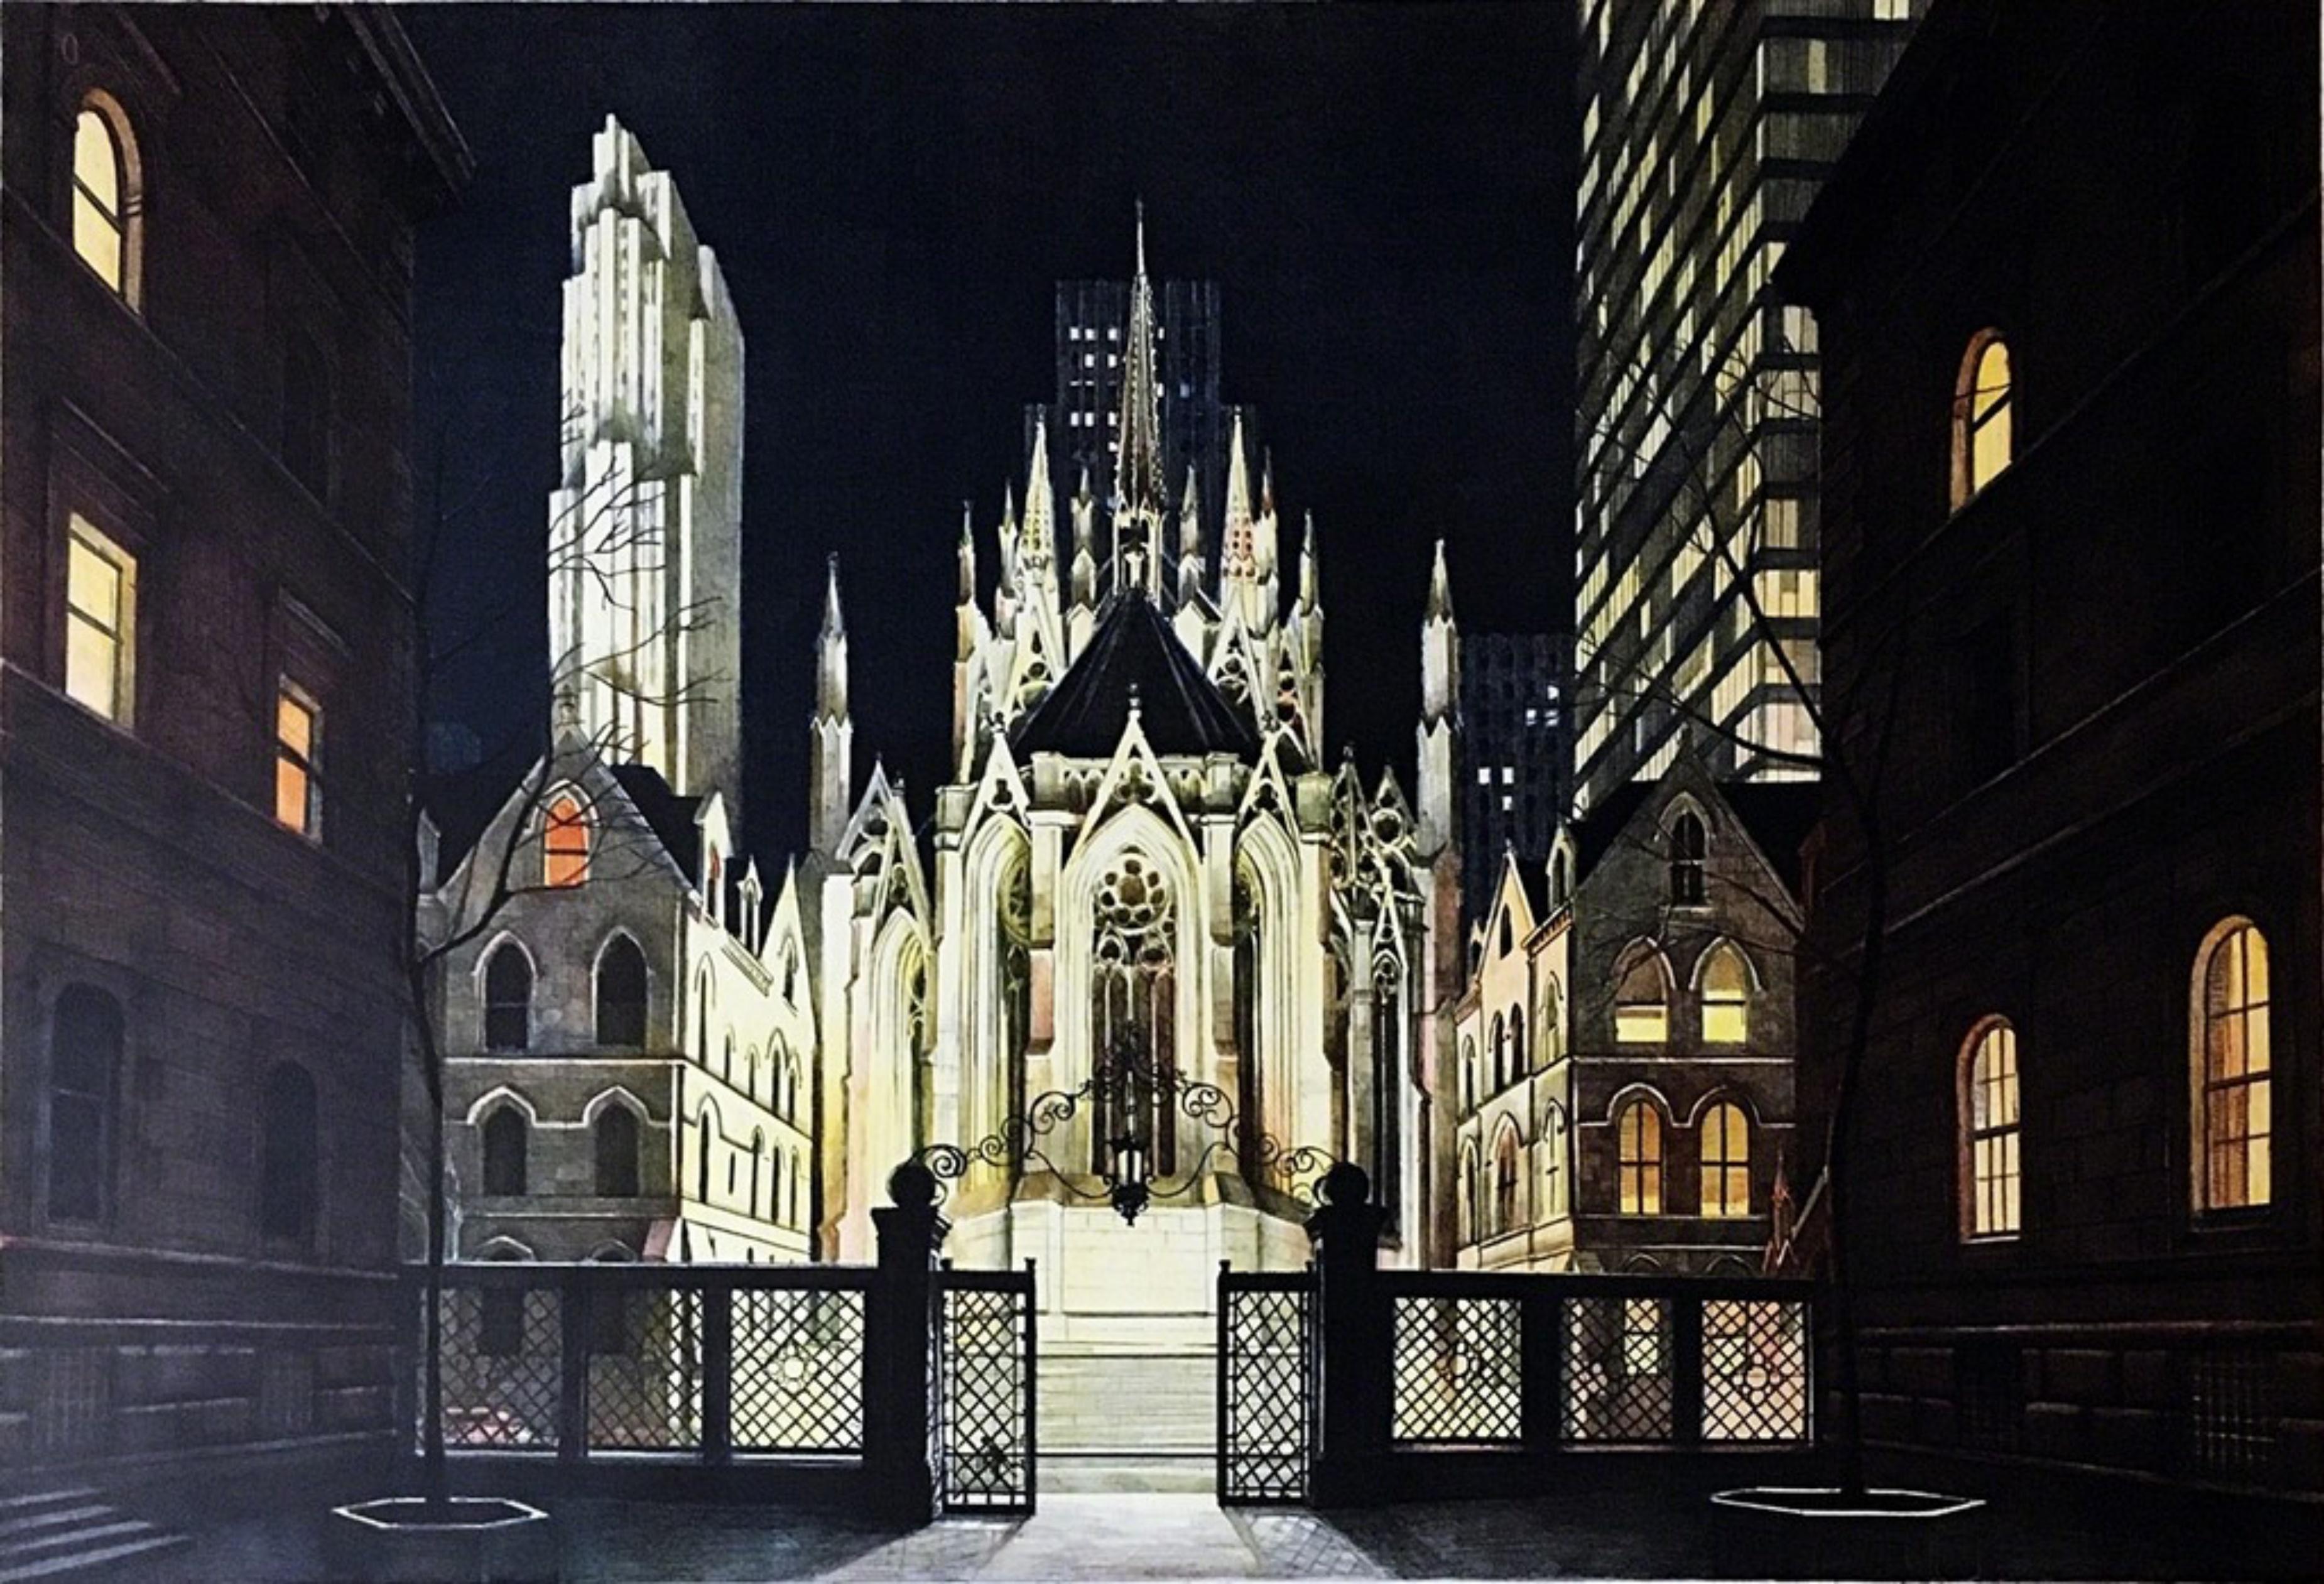 Villard Courtyard, St. Patrick's Cathedral, New York - Print by Richard Haas